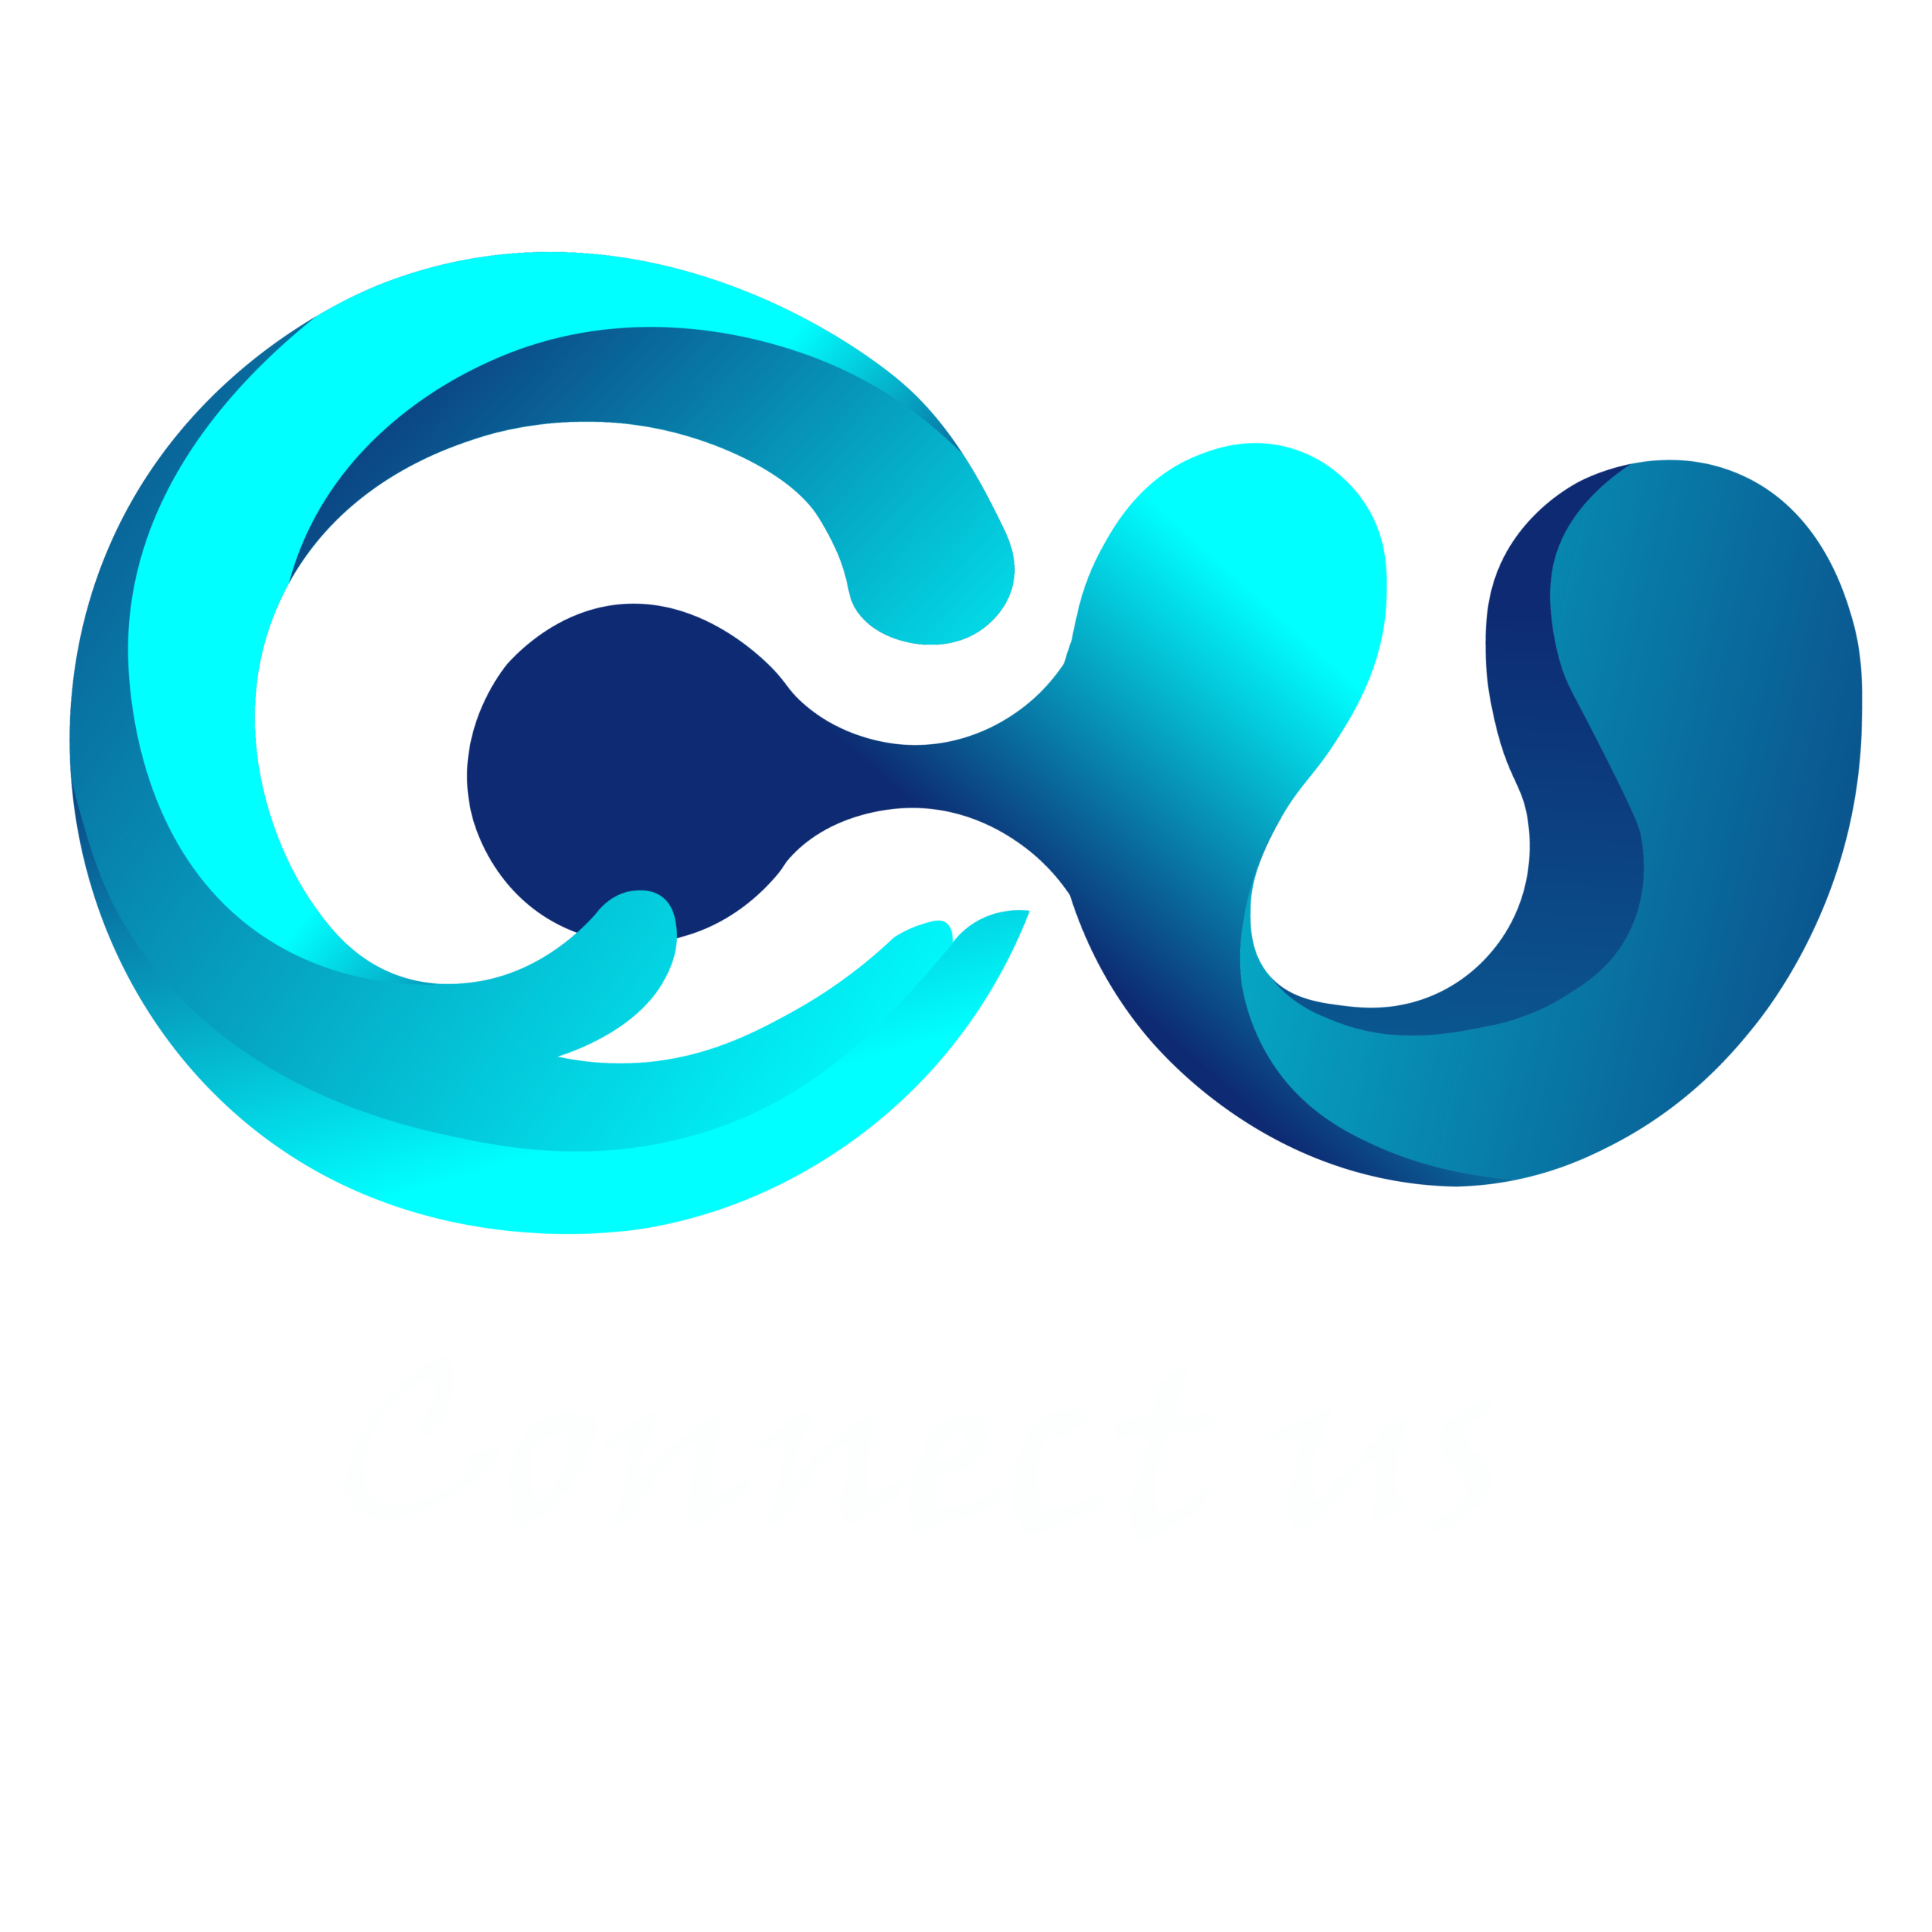 (c) Connectusportal.com